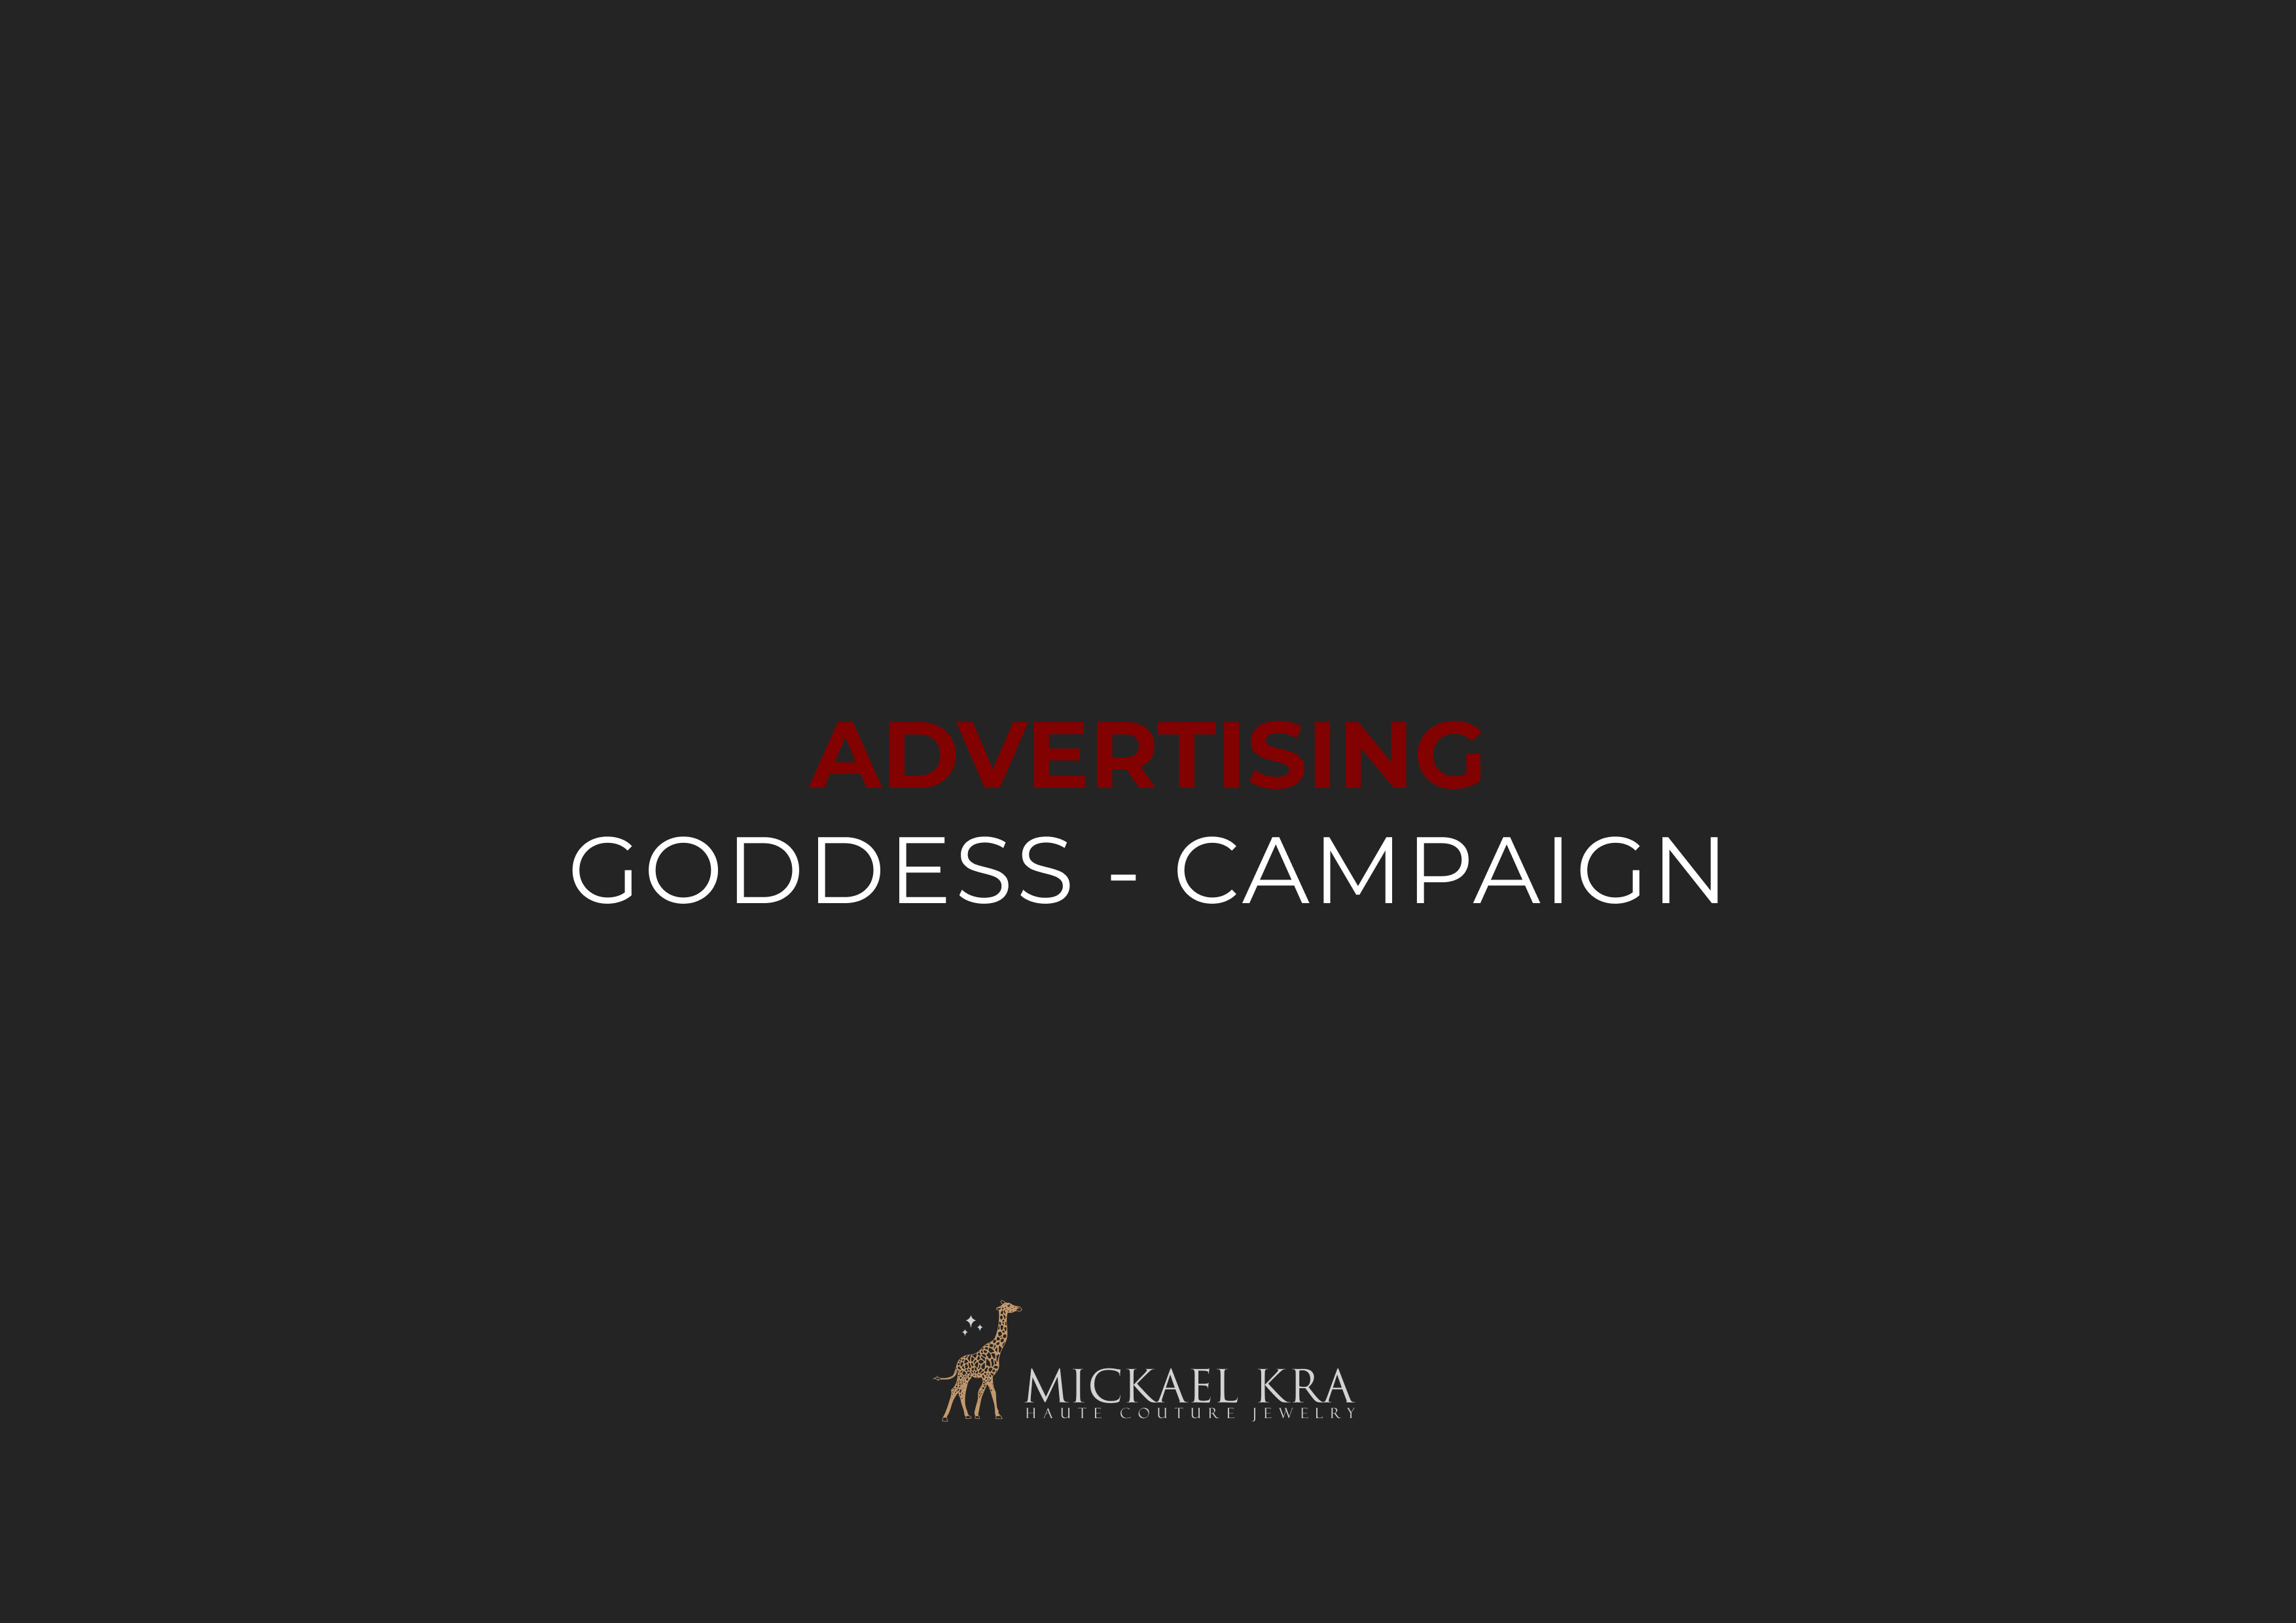 Goddess campaign